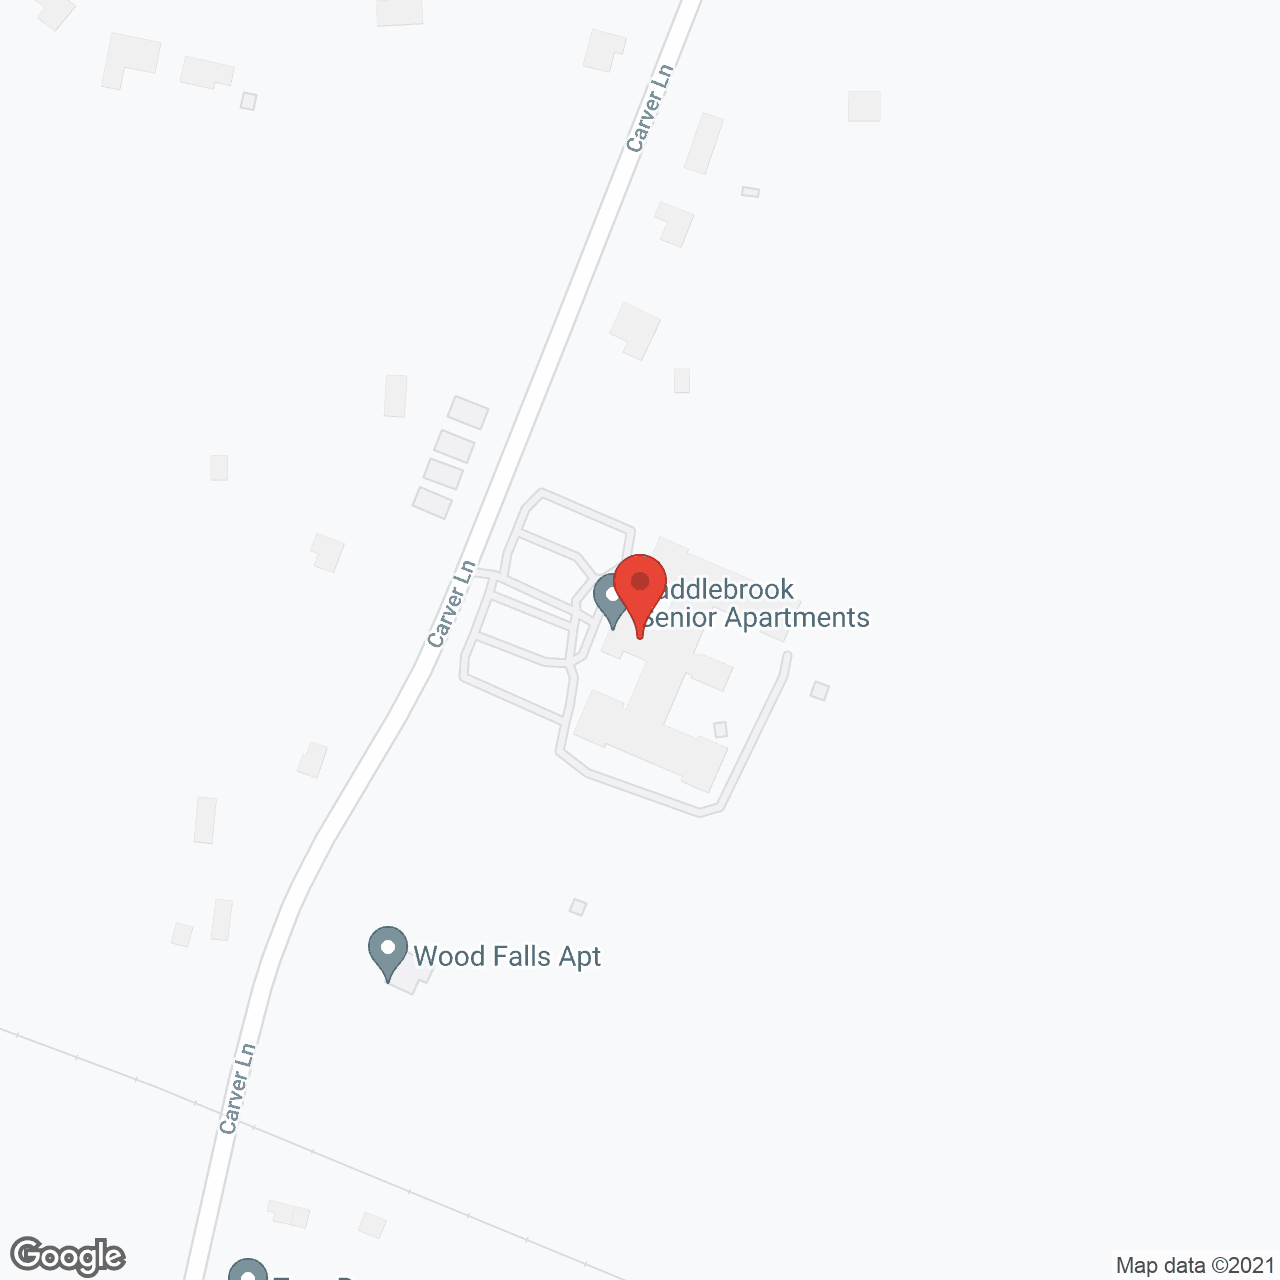 Saddlebrook Senior Apartments in google map